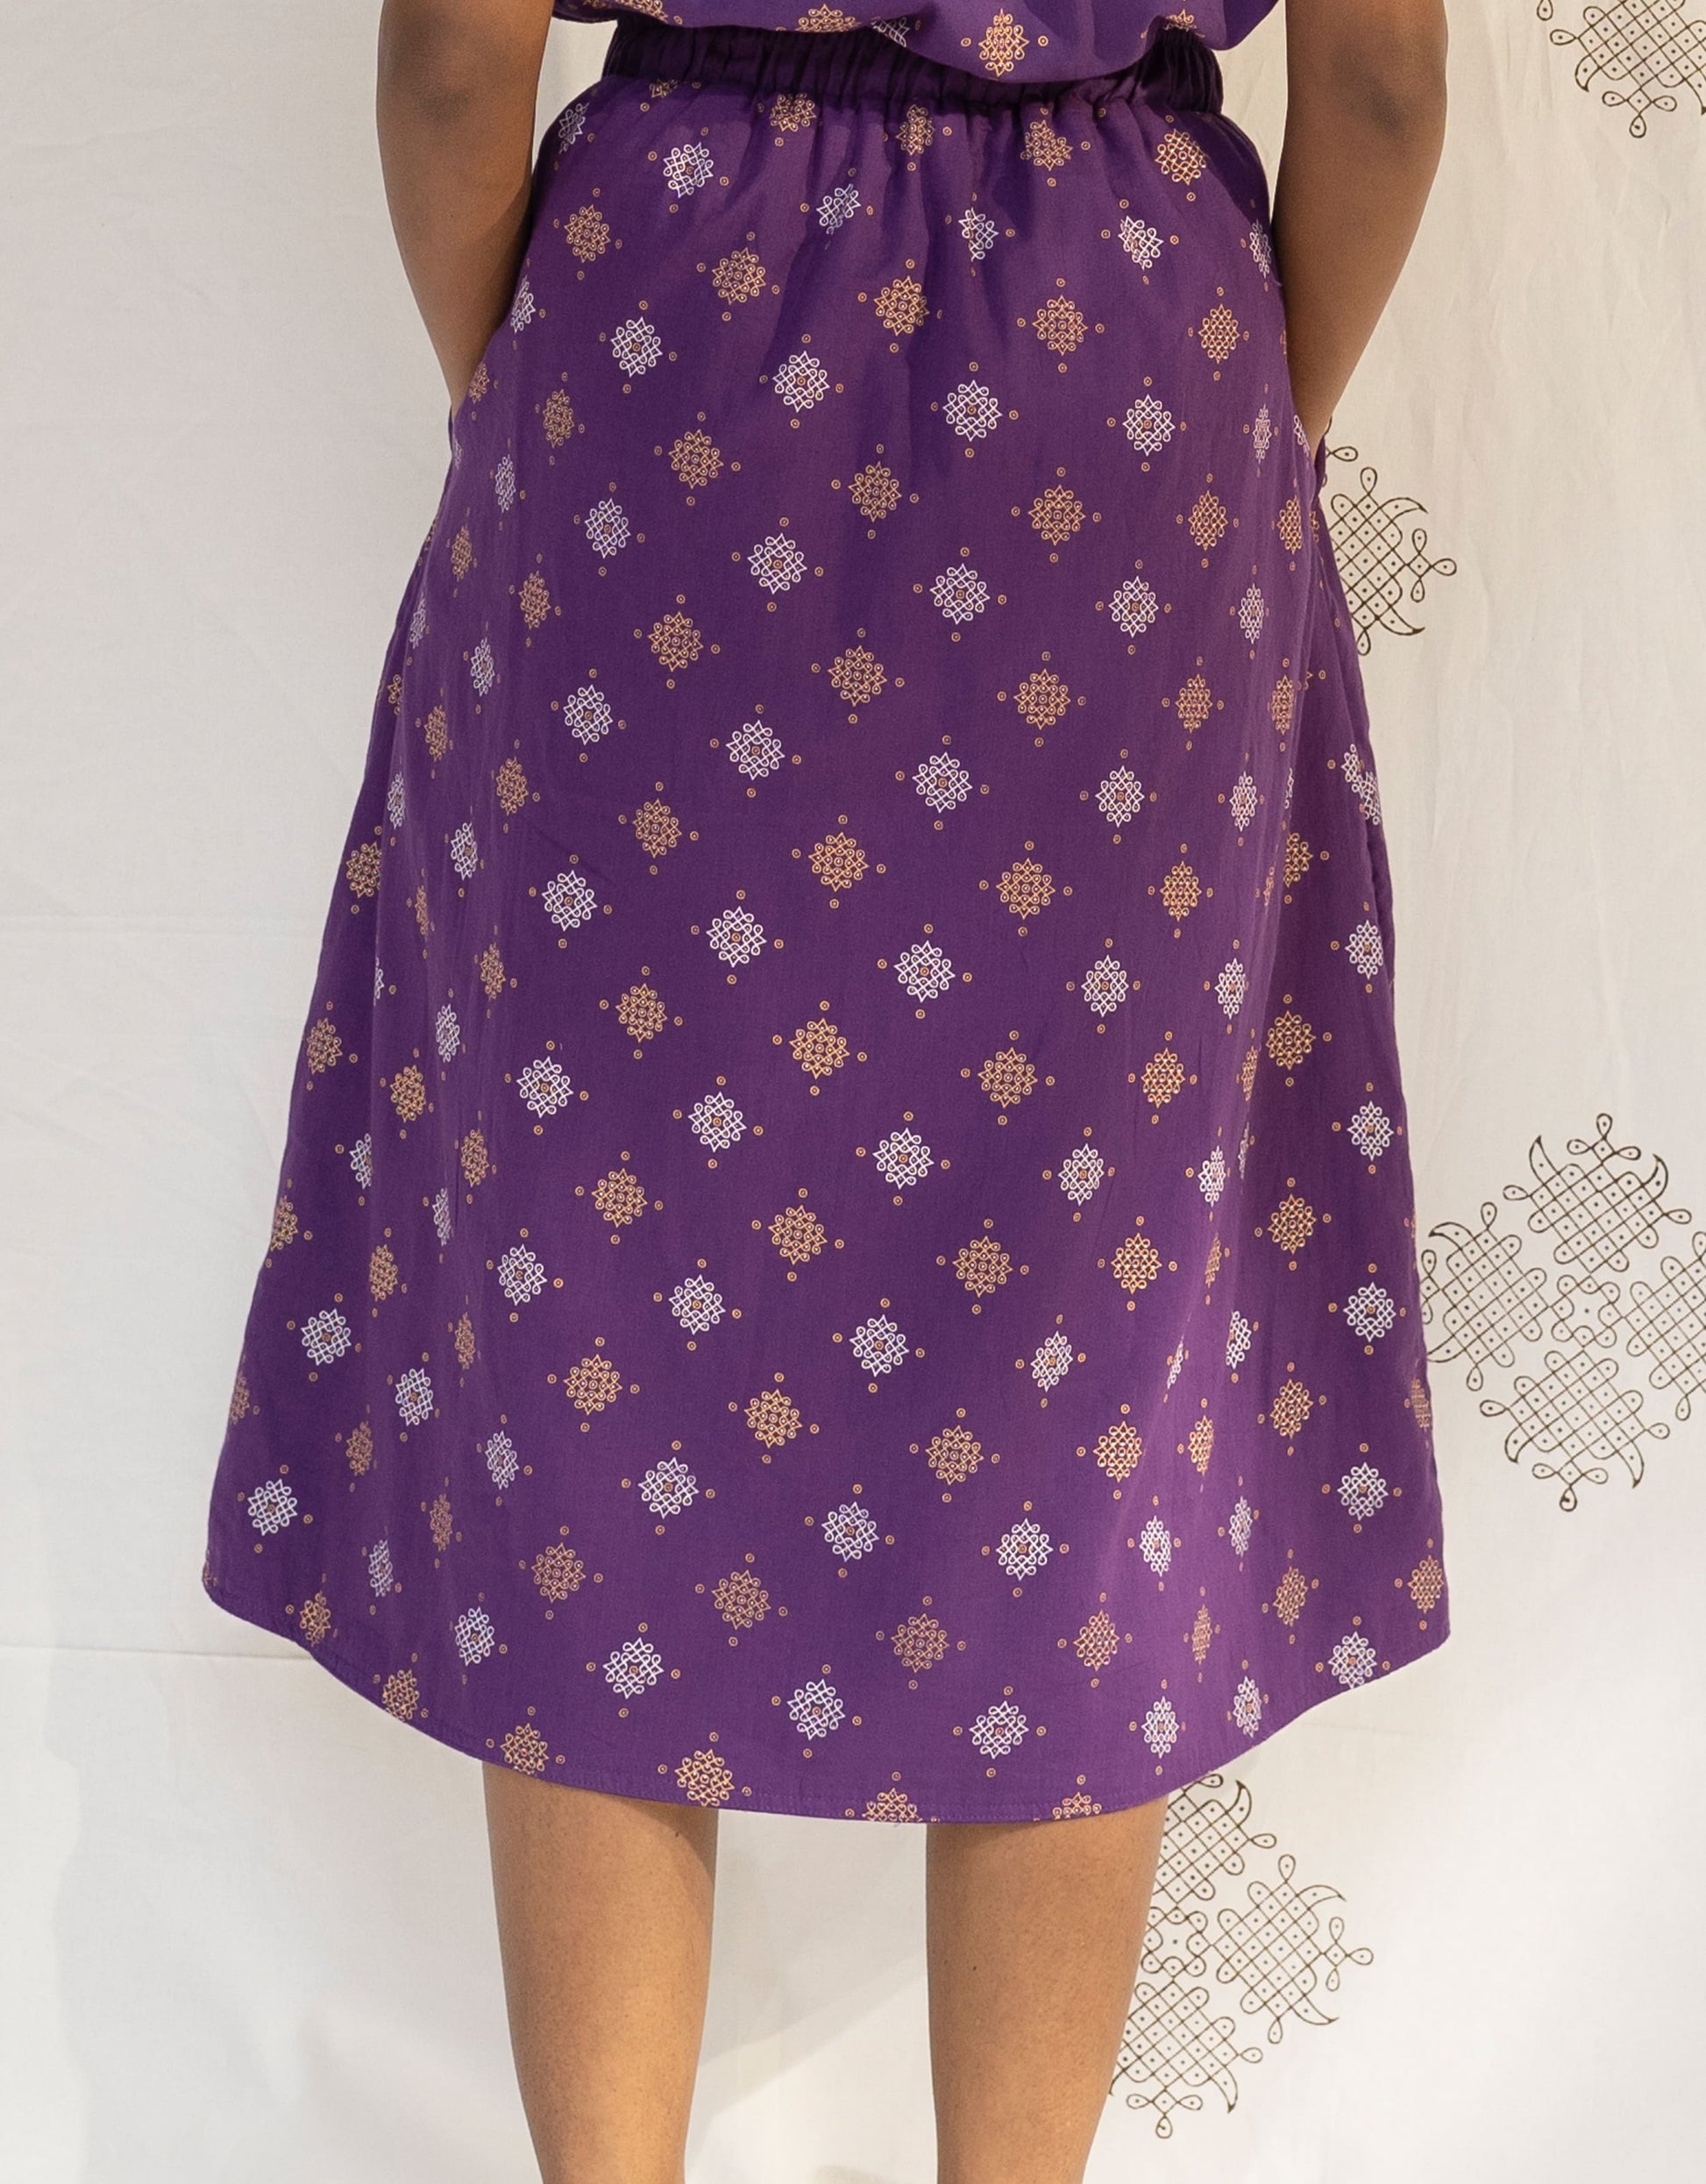 Back view of Hueloom's Reversible Midi Skirt in Purple Kolam print.